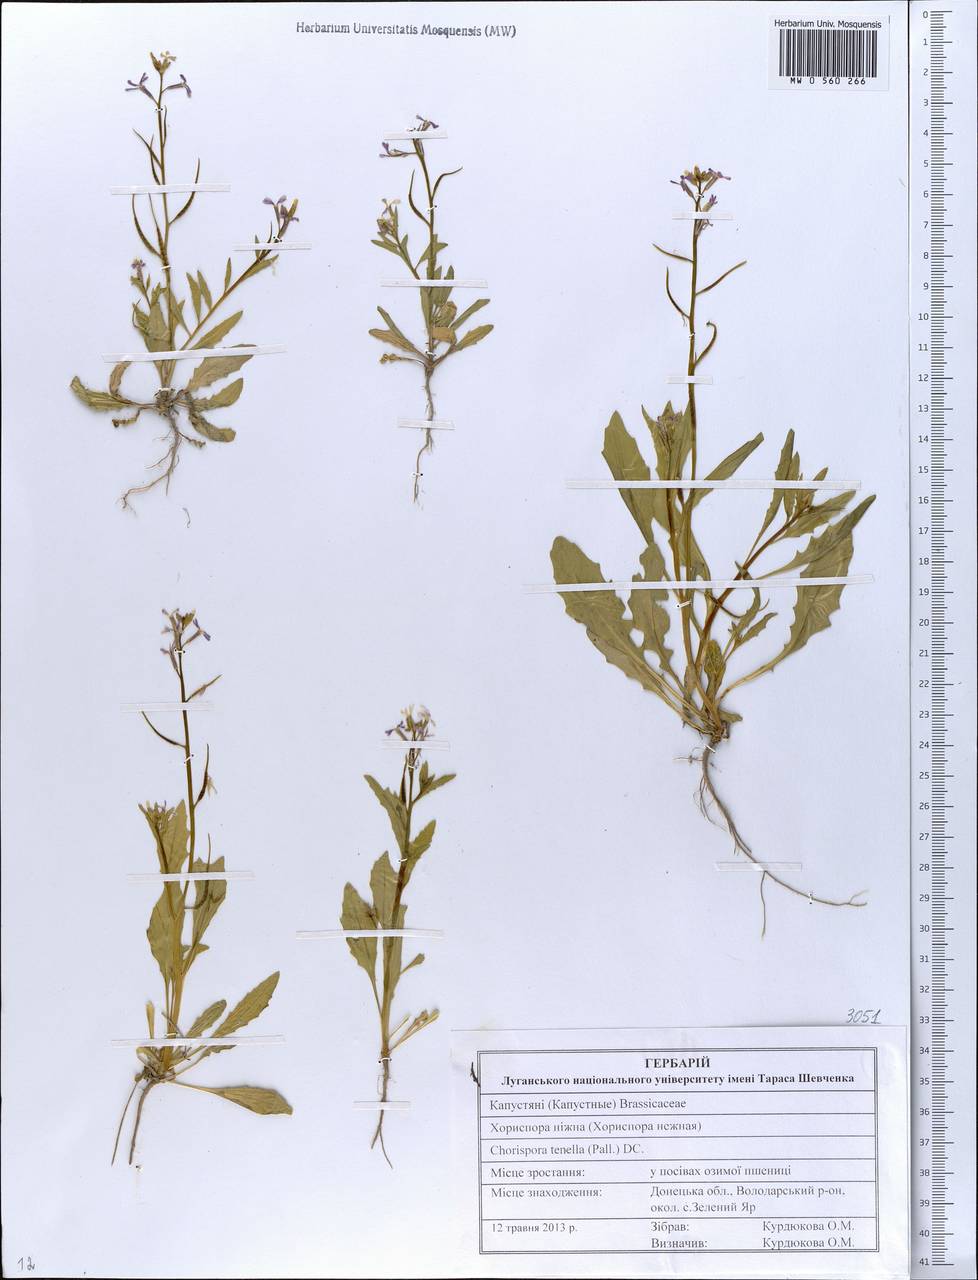 Хориспора нежная Chorispora tenella (Pall.) DC.